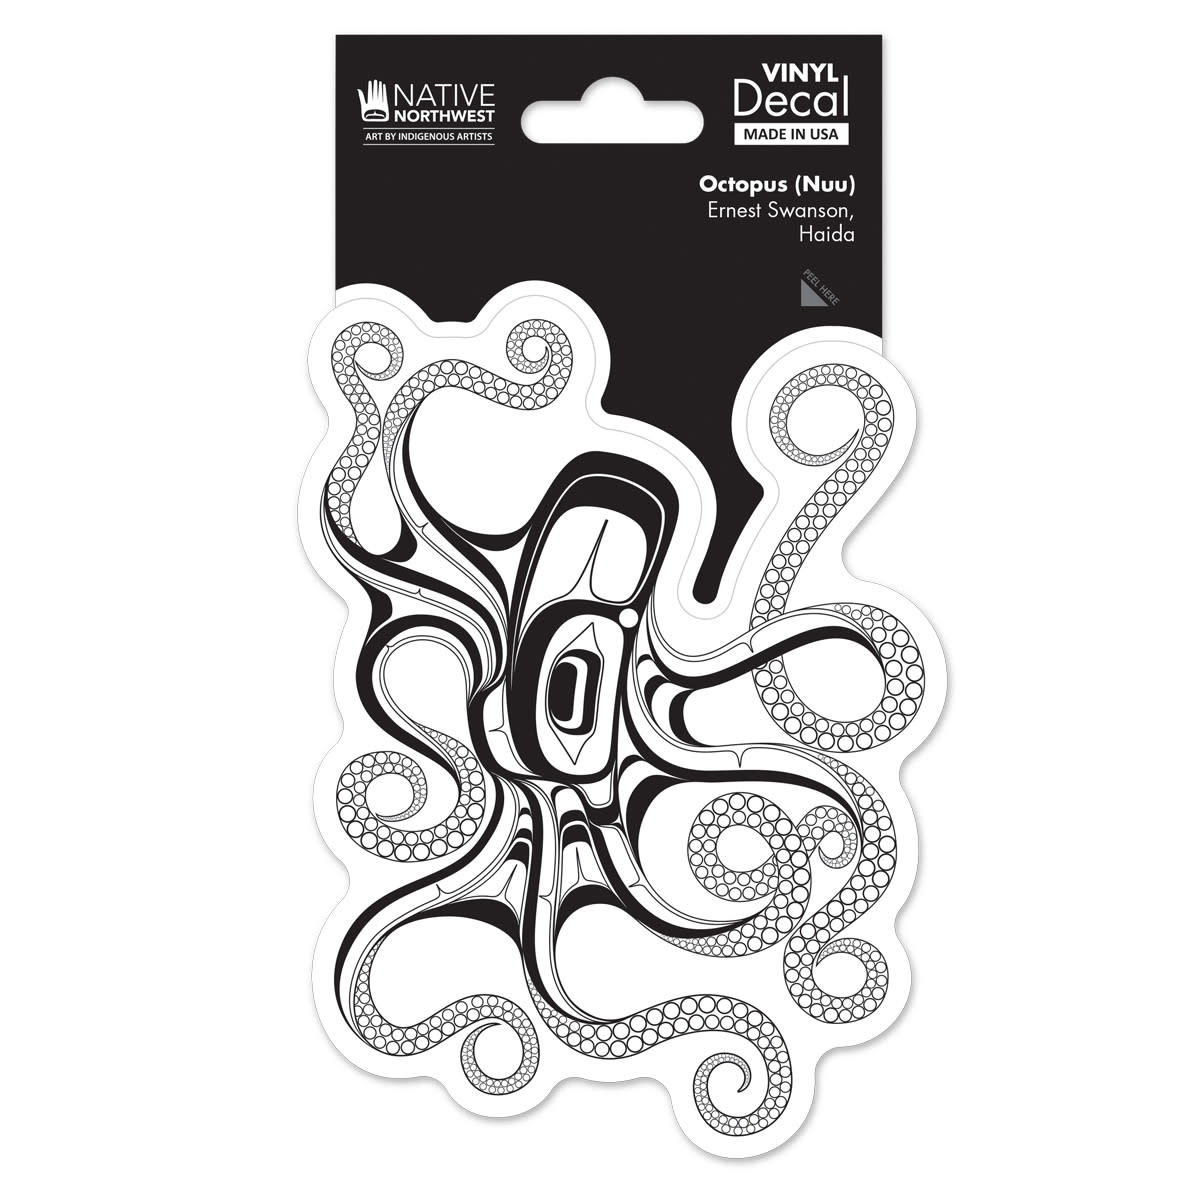 Premium Decal - Octopus (Nuu) by Ernest Swanson-1